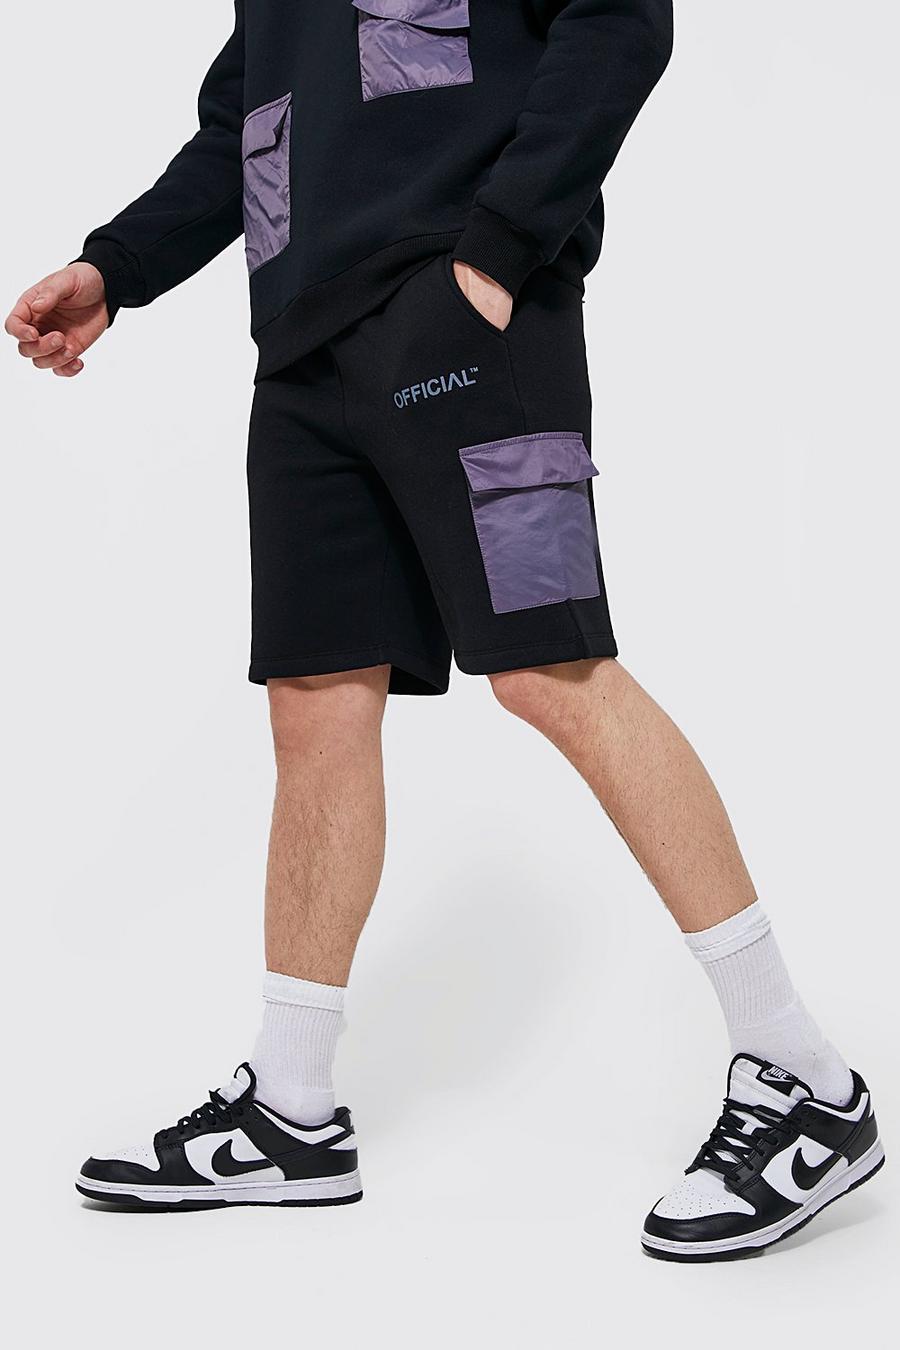 Pantaloncini Official stile Cargo Regular Fit, Black nero